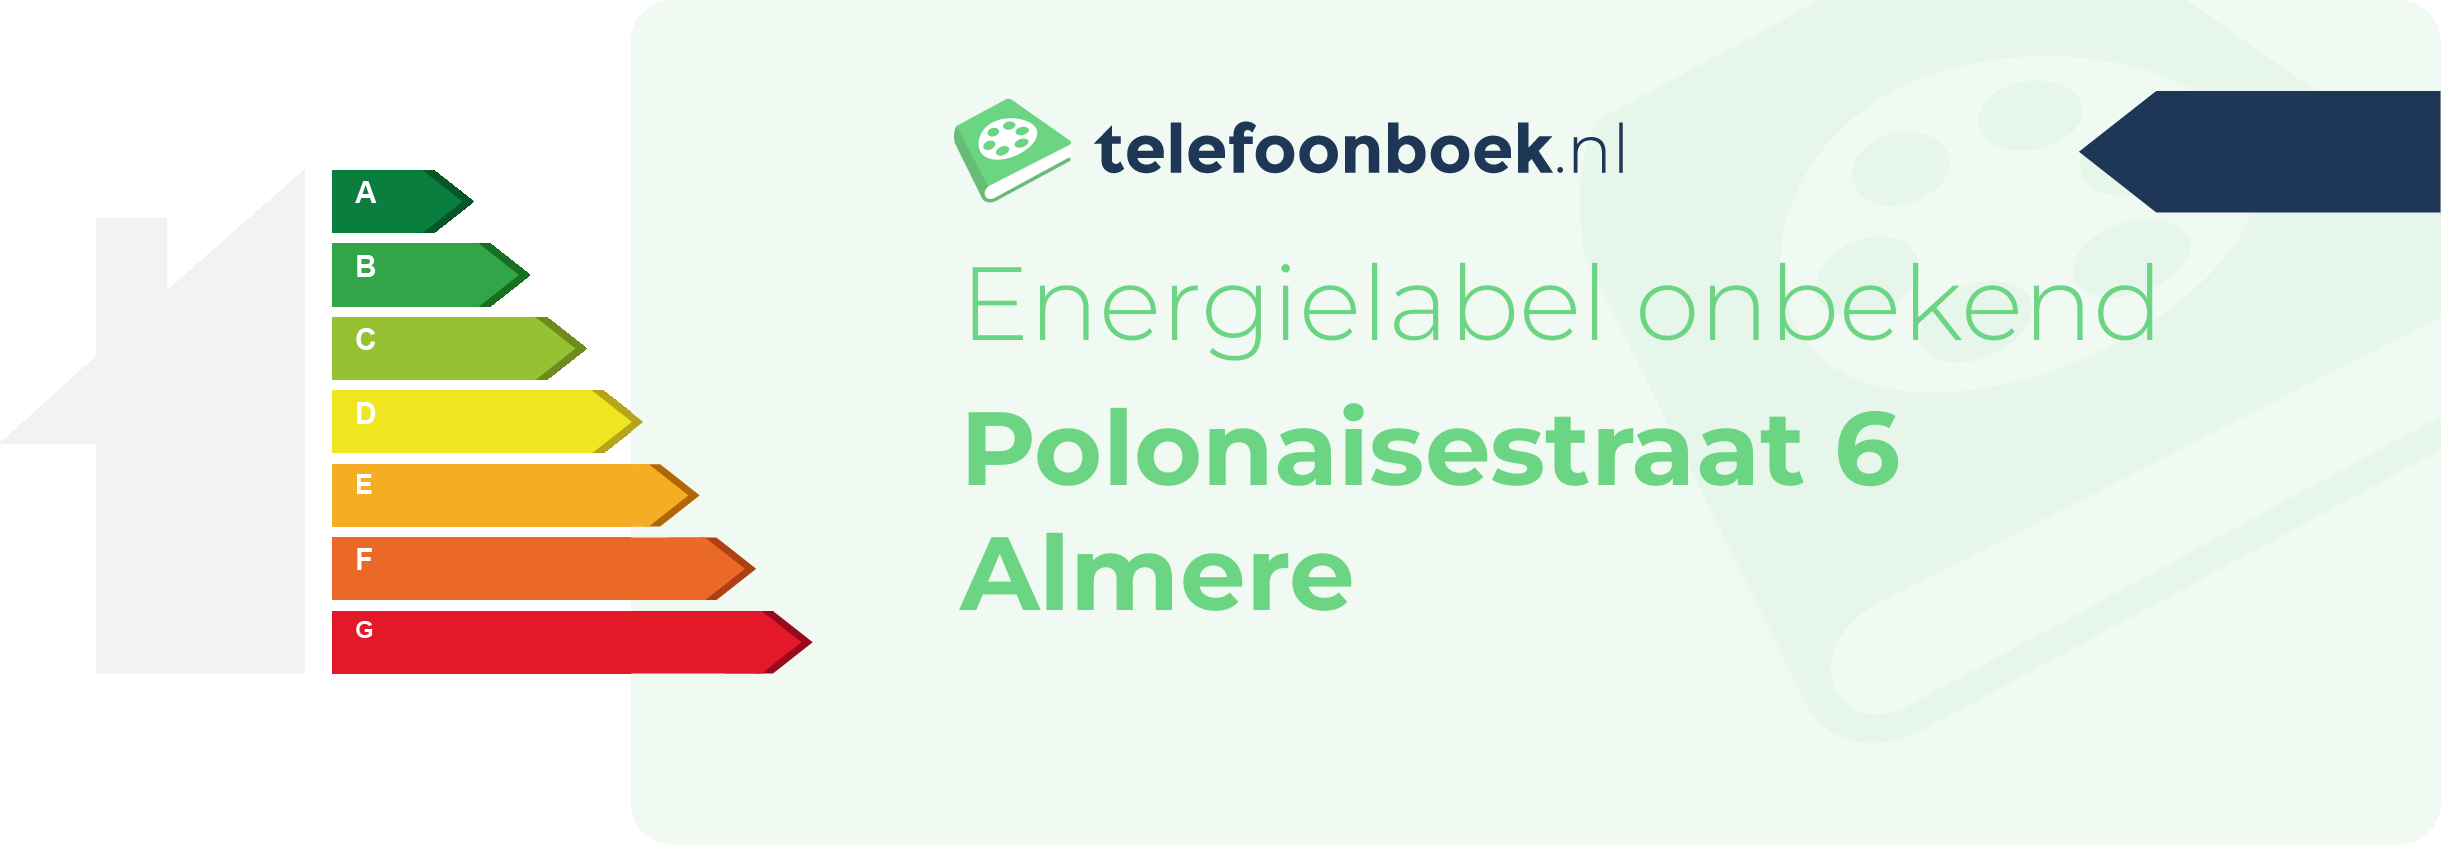 Energielabel Polonaisestraat 6 Almere